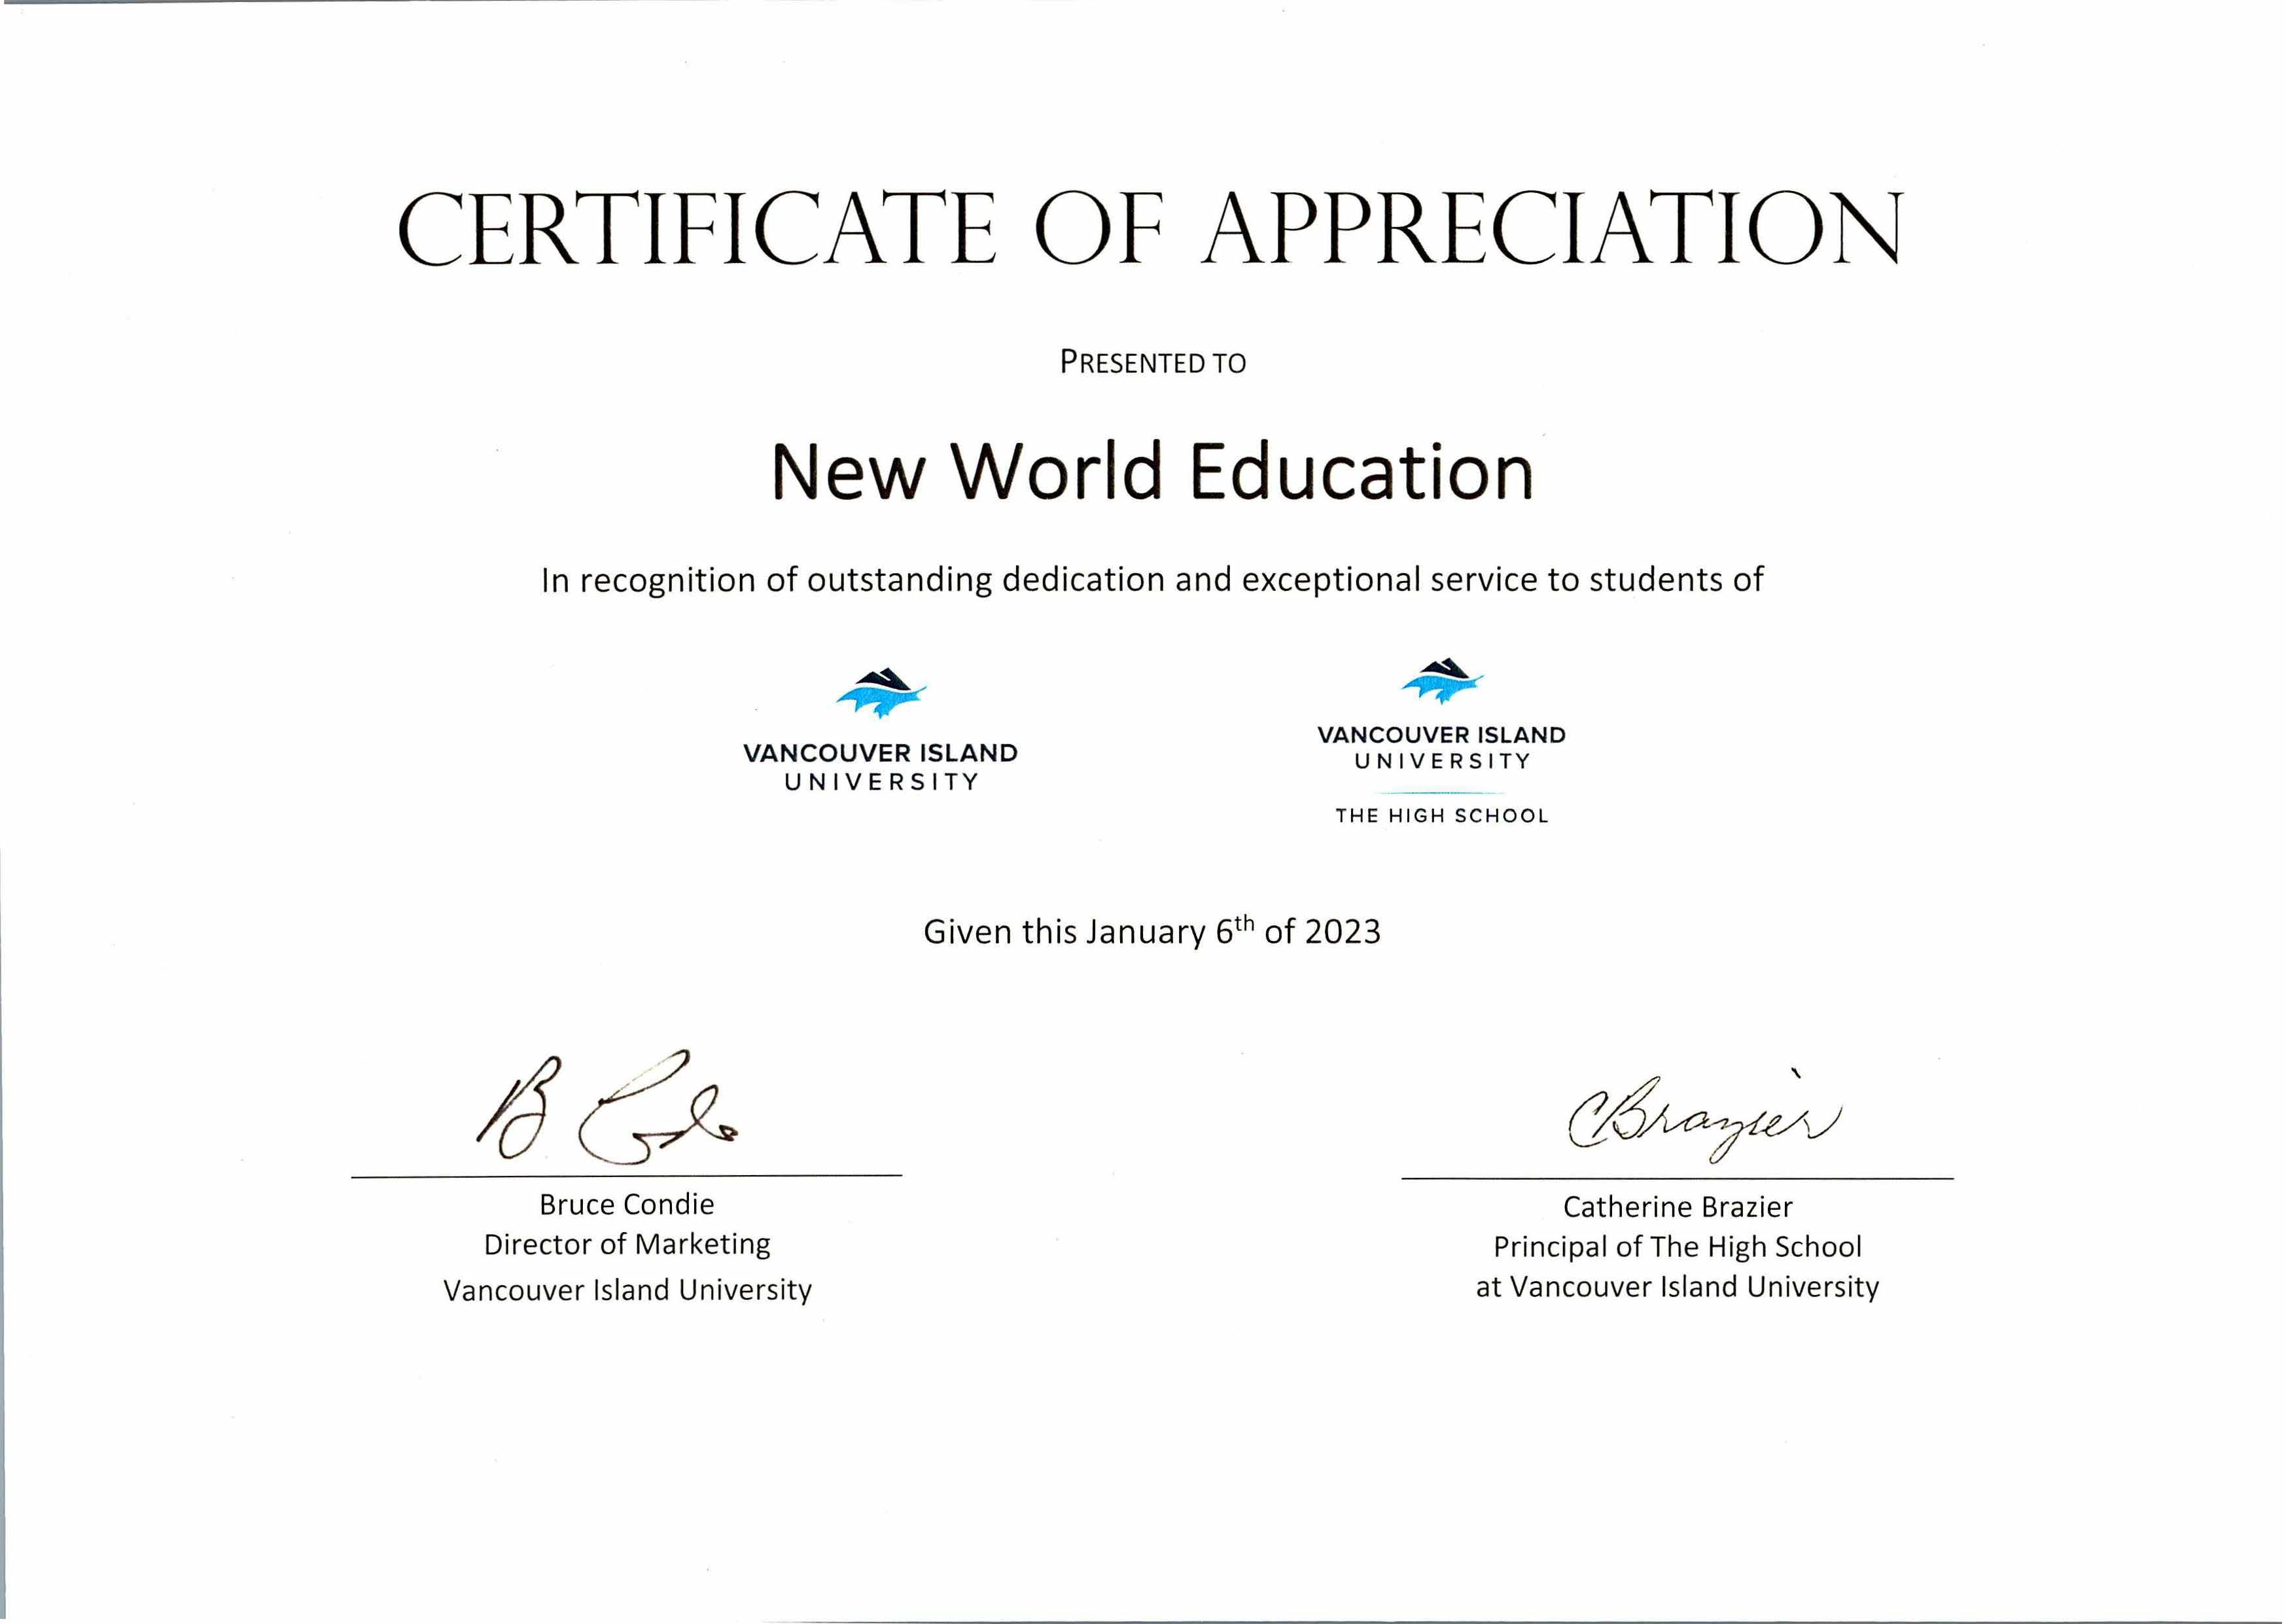 Certificate of Appreciation - Vancouver Island University, Canada